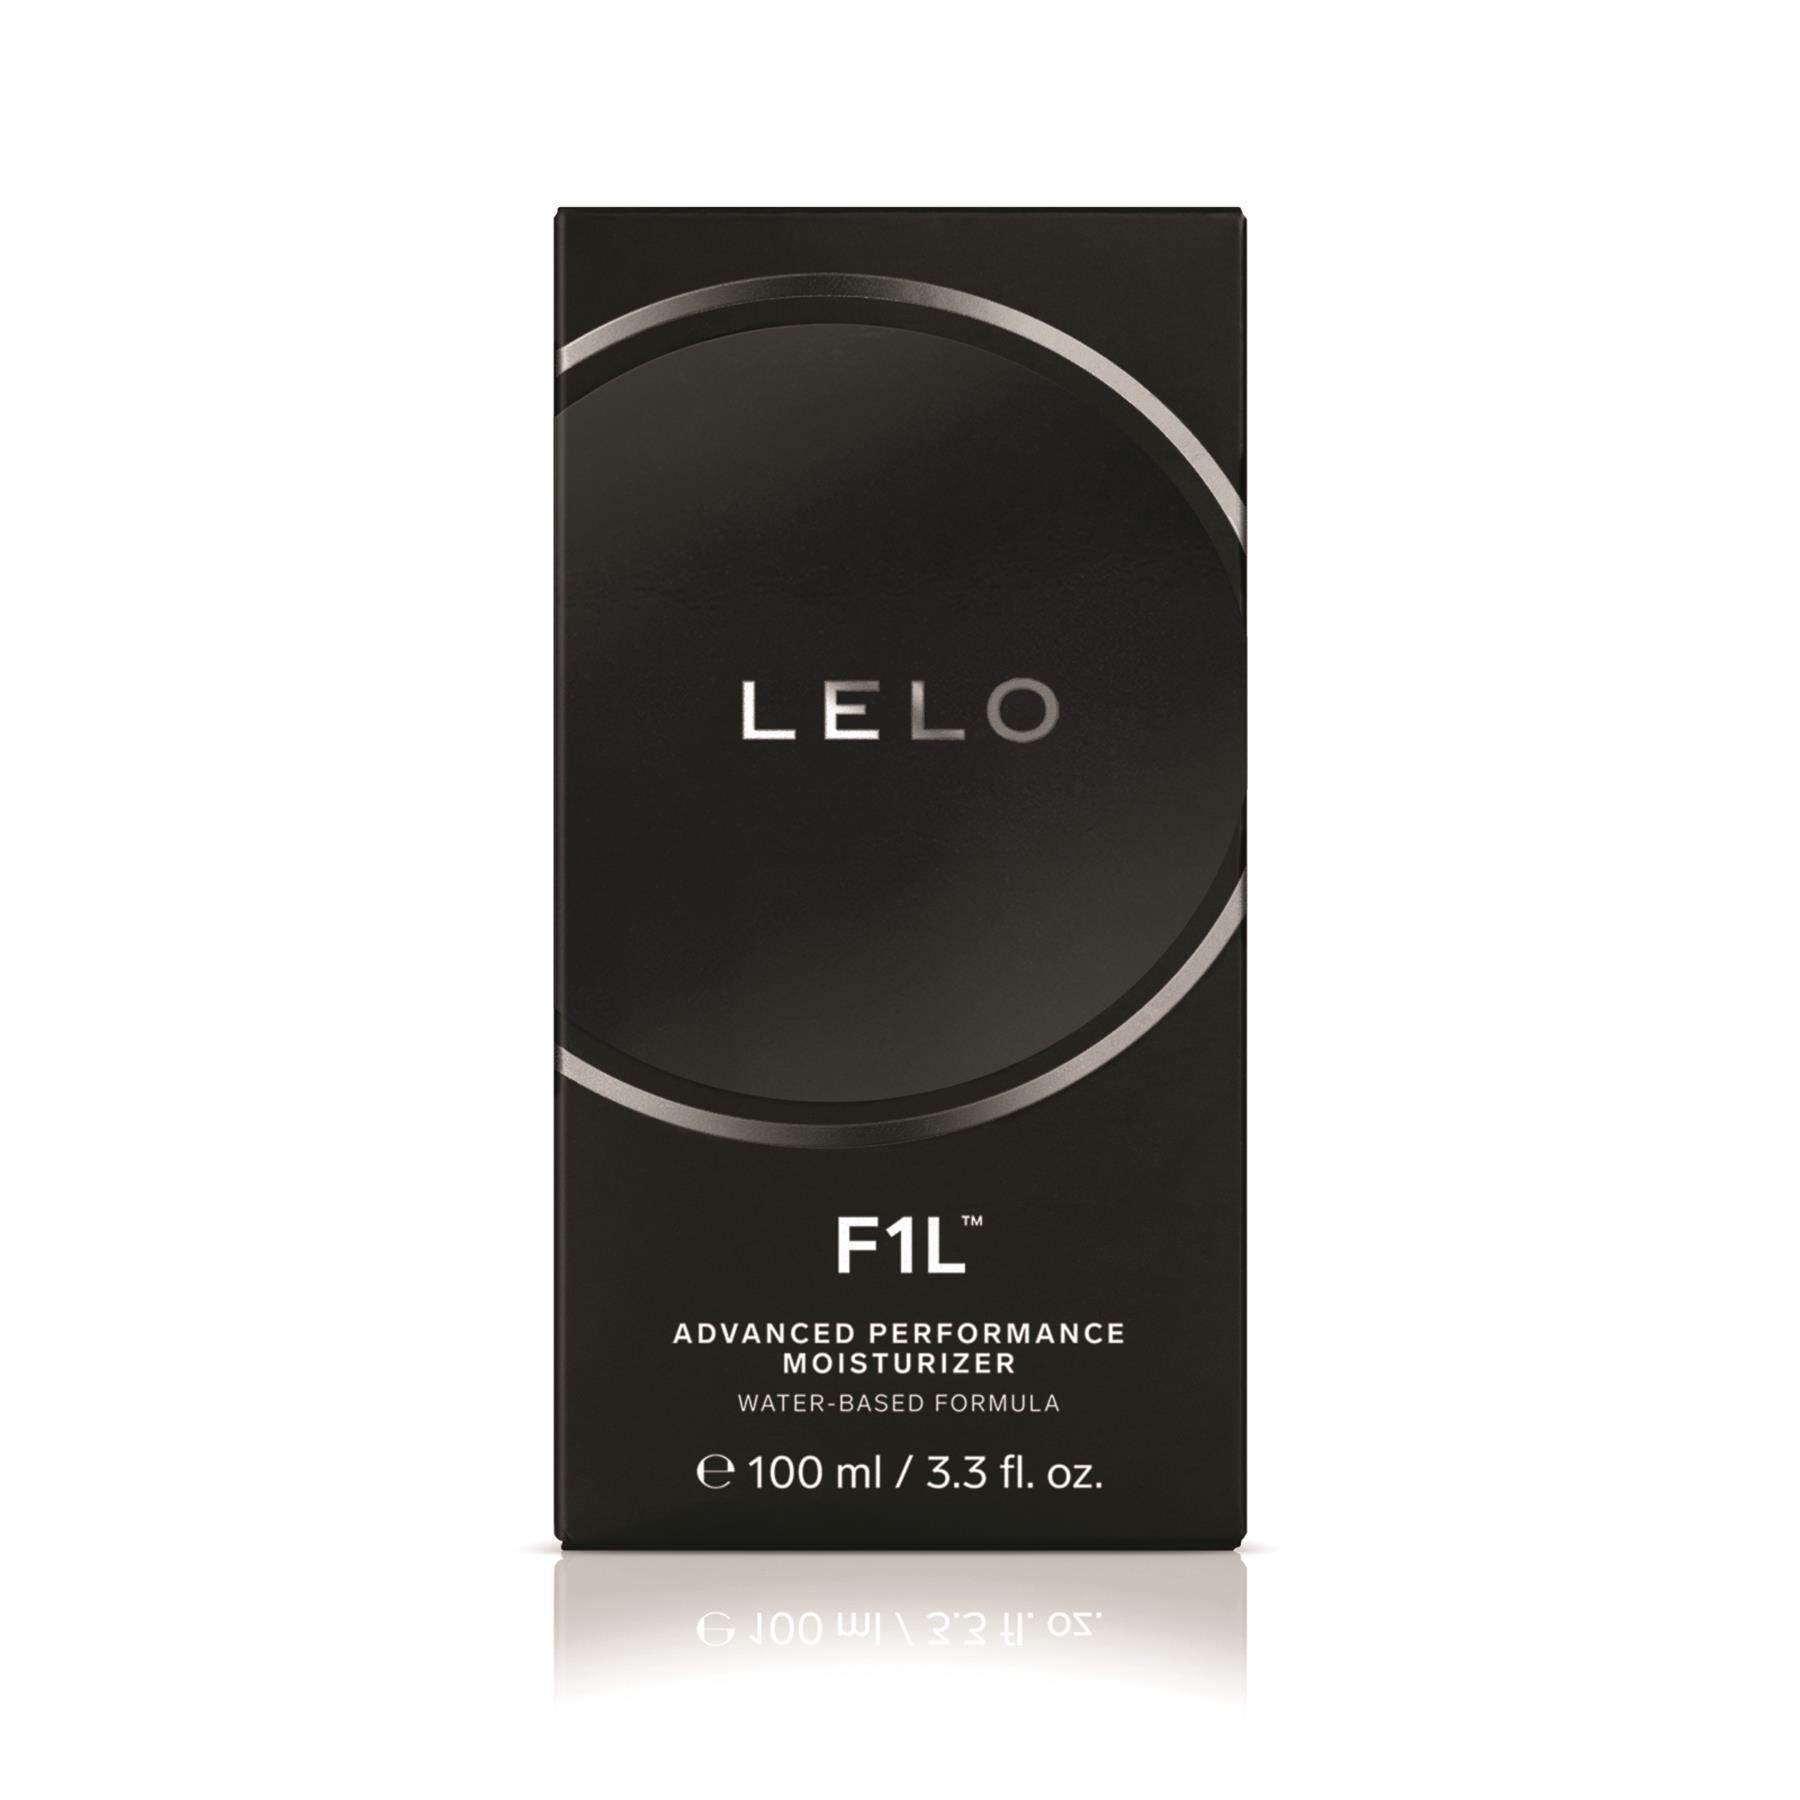 Lelo F1l Advanced Performance Moisturizer - Front of Box